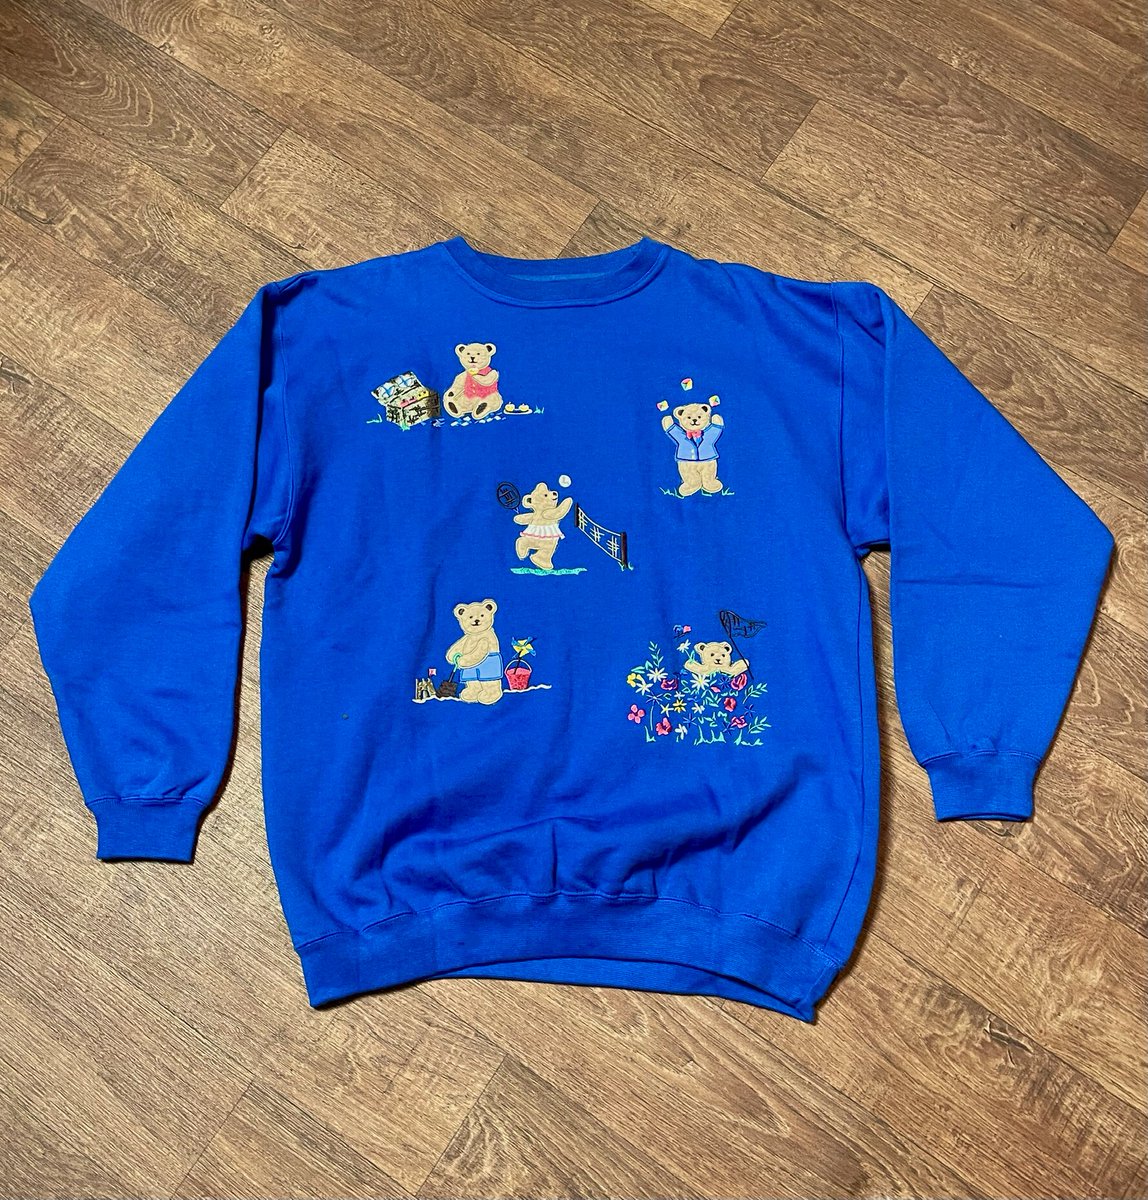 Vintage Clothing | 1990s Vintage Blue Teddy Bear Sweatshirt Size 14/16
 myvintage.uk/product-page/v… #vintage #retro #1990s #90s #1990sclothing #1990sStyle #vintageclothing #vintagestyle #vintagefashion #secondhand #preloved #vintagesweater #sweater